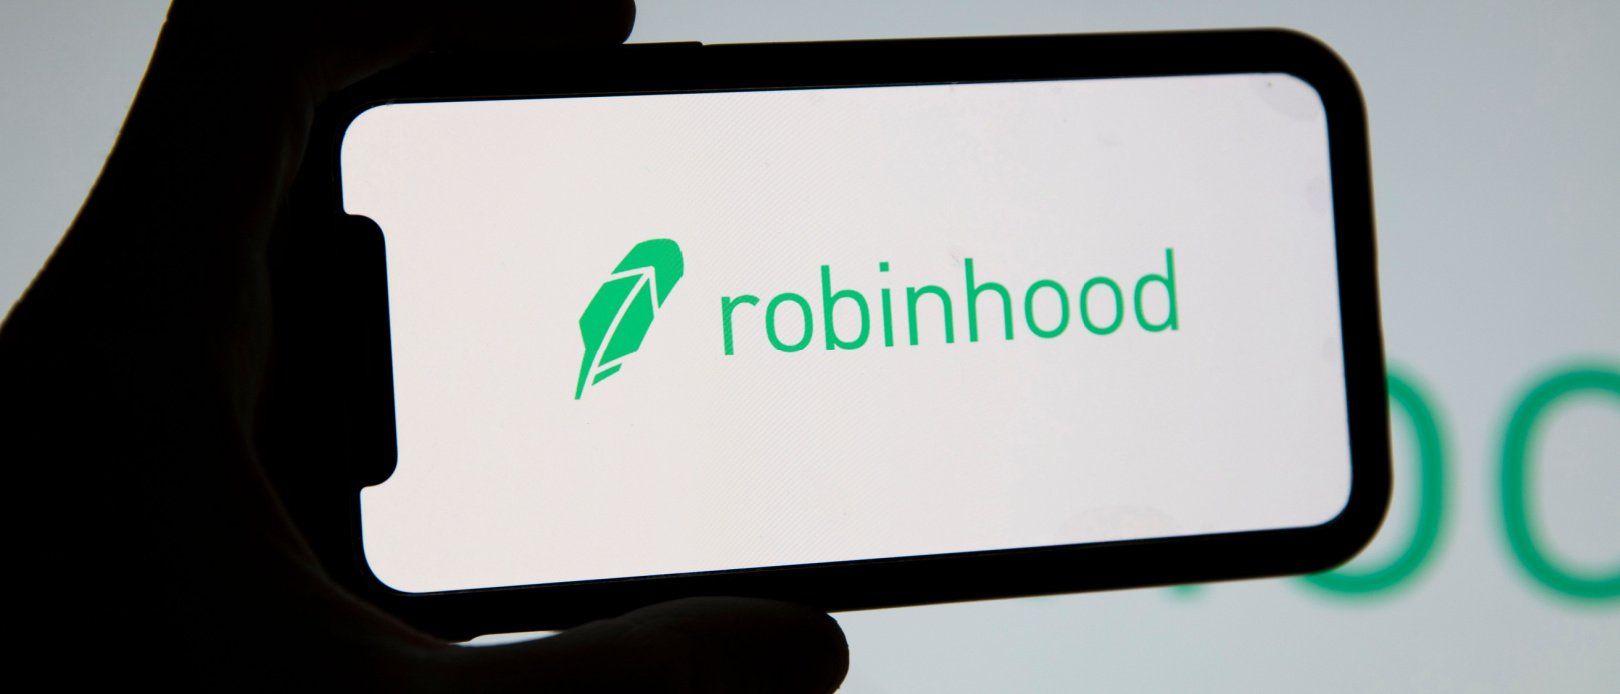 Robin hood statue in nottingham